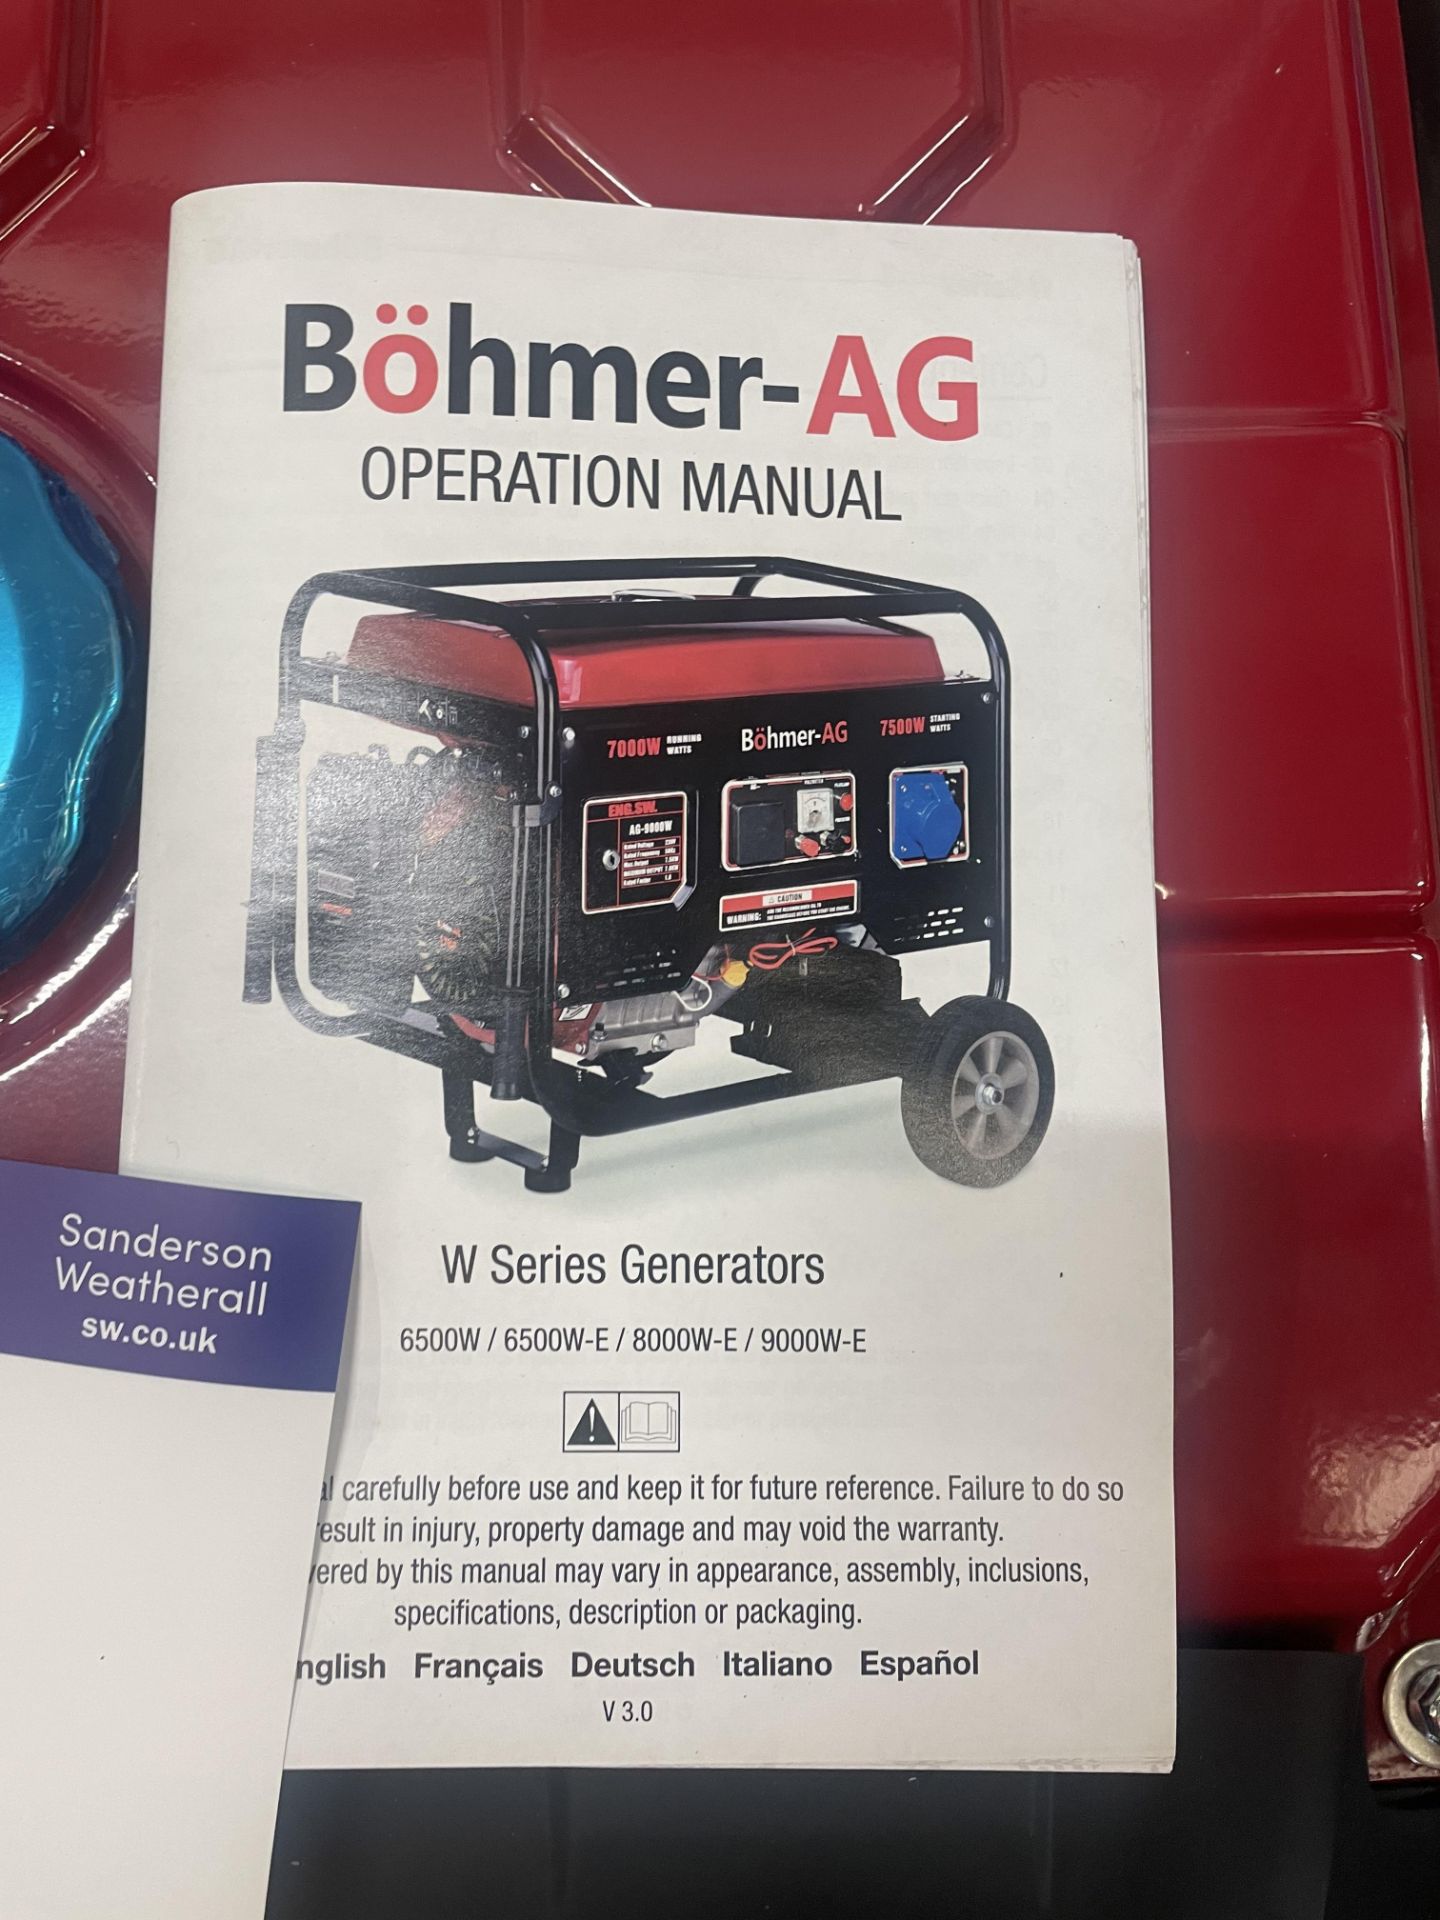 Bohmer-AG AG-6500W-e Petrol Engined Generator, 280 - Image 3 of 4